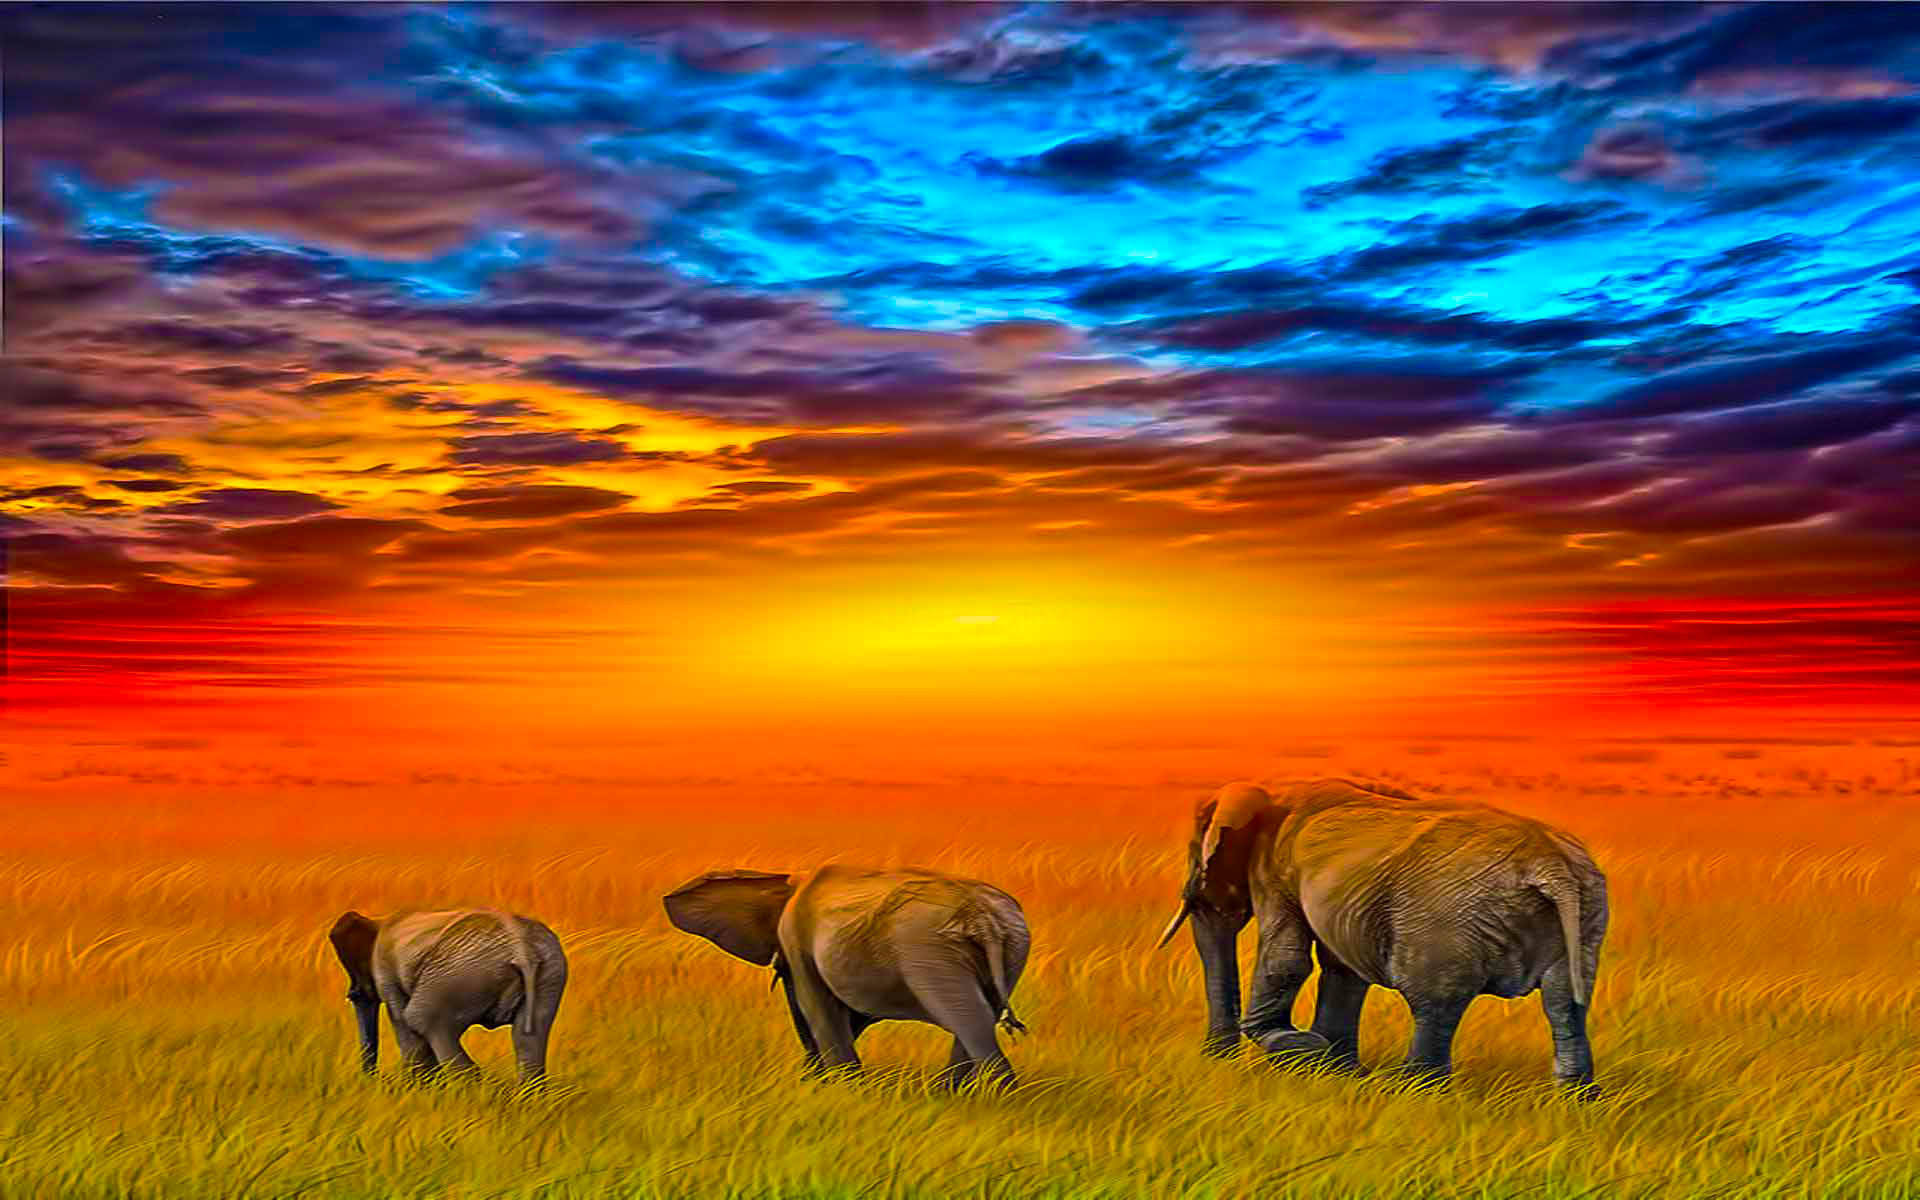 Elephants In Africa Digital Art Background